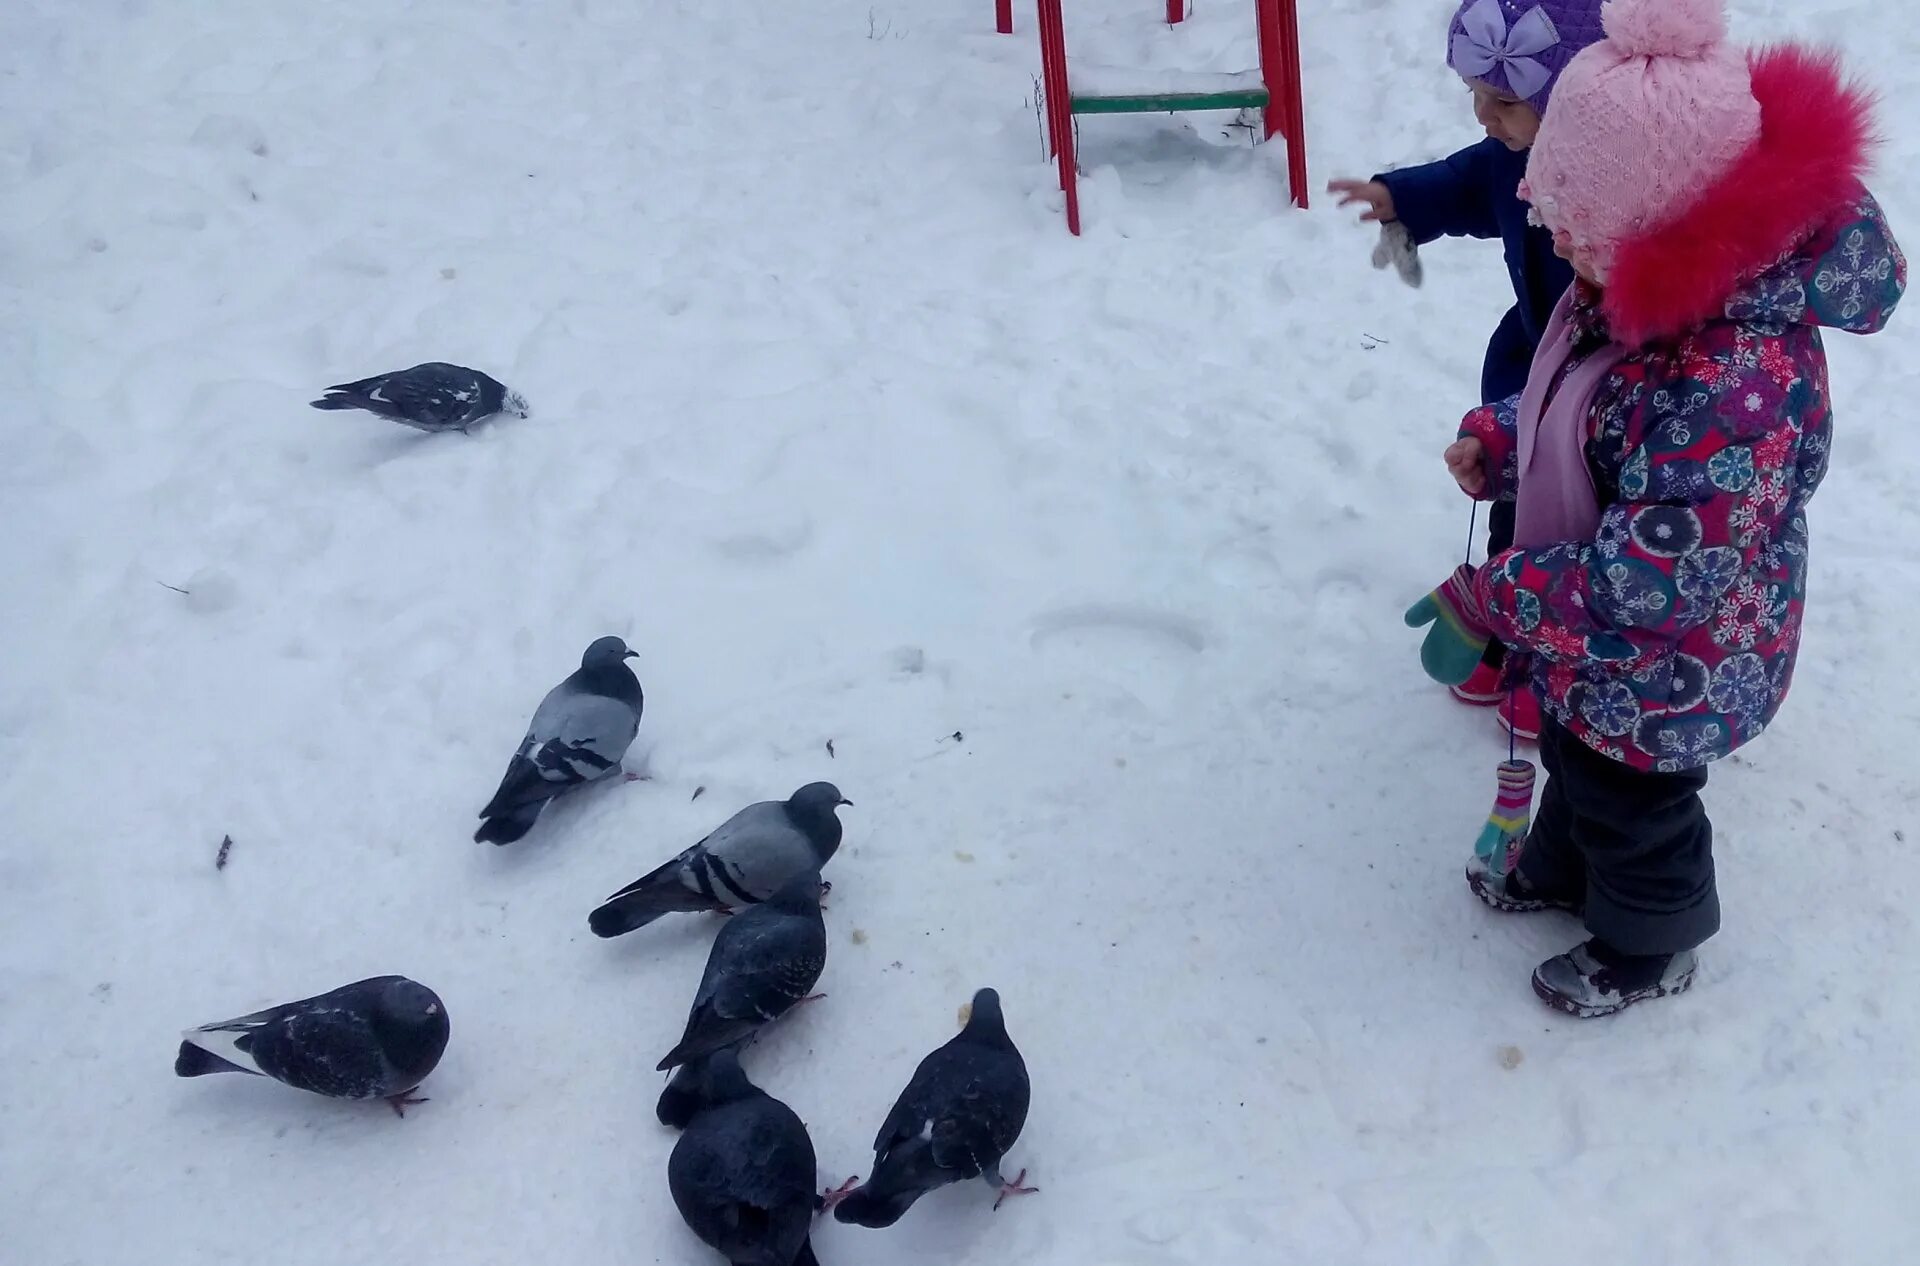 Забота о птицах. Дети кормят птиц зимой. Дети заботятся о птицах. Забота о птицах в зимний период. Как заботиться о птицах